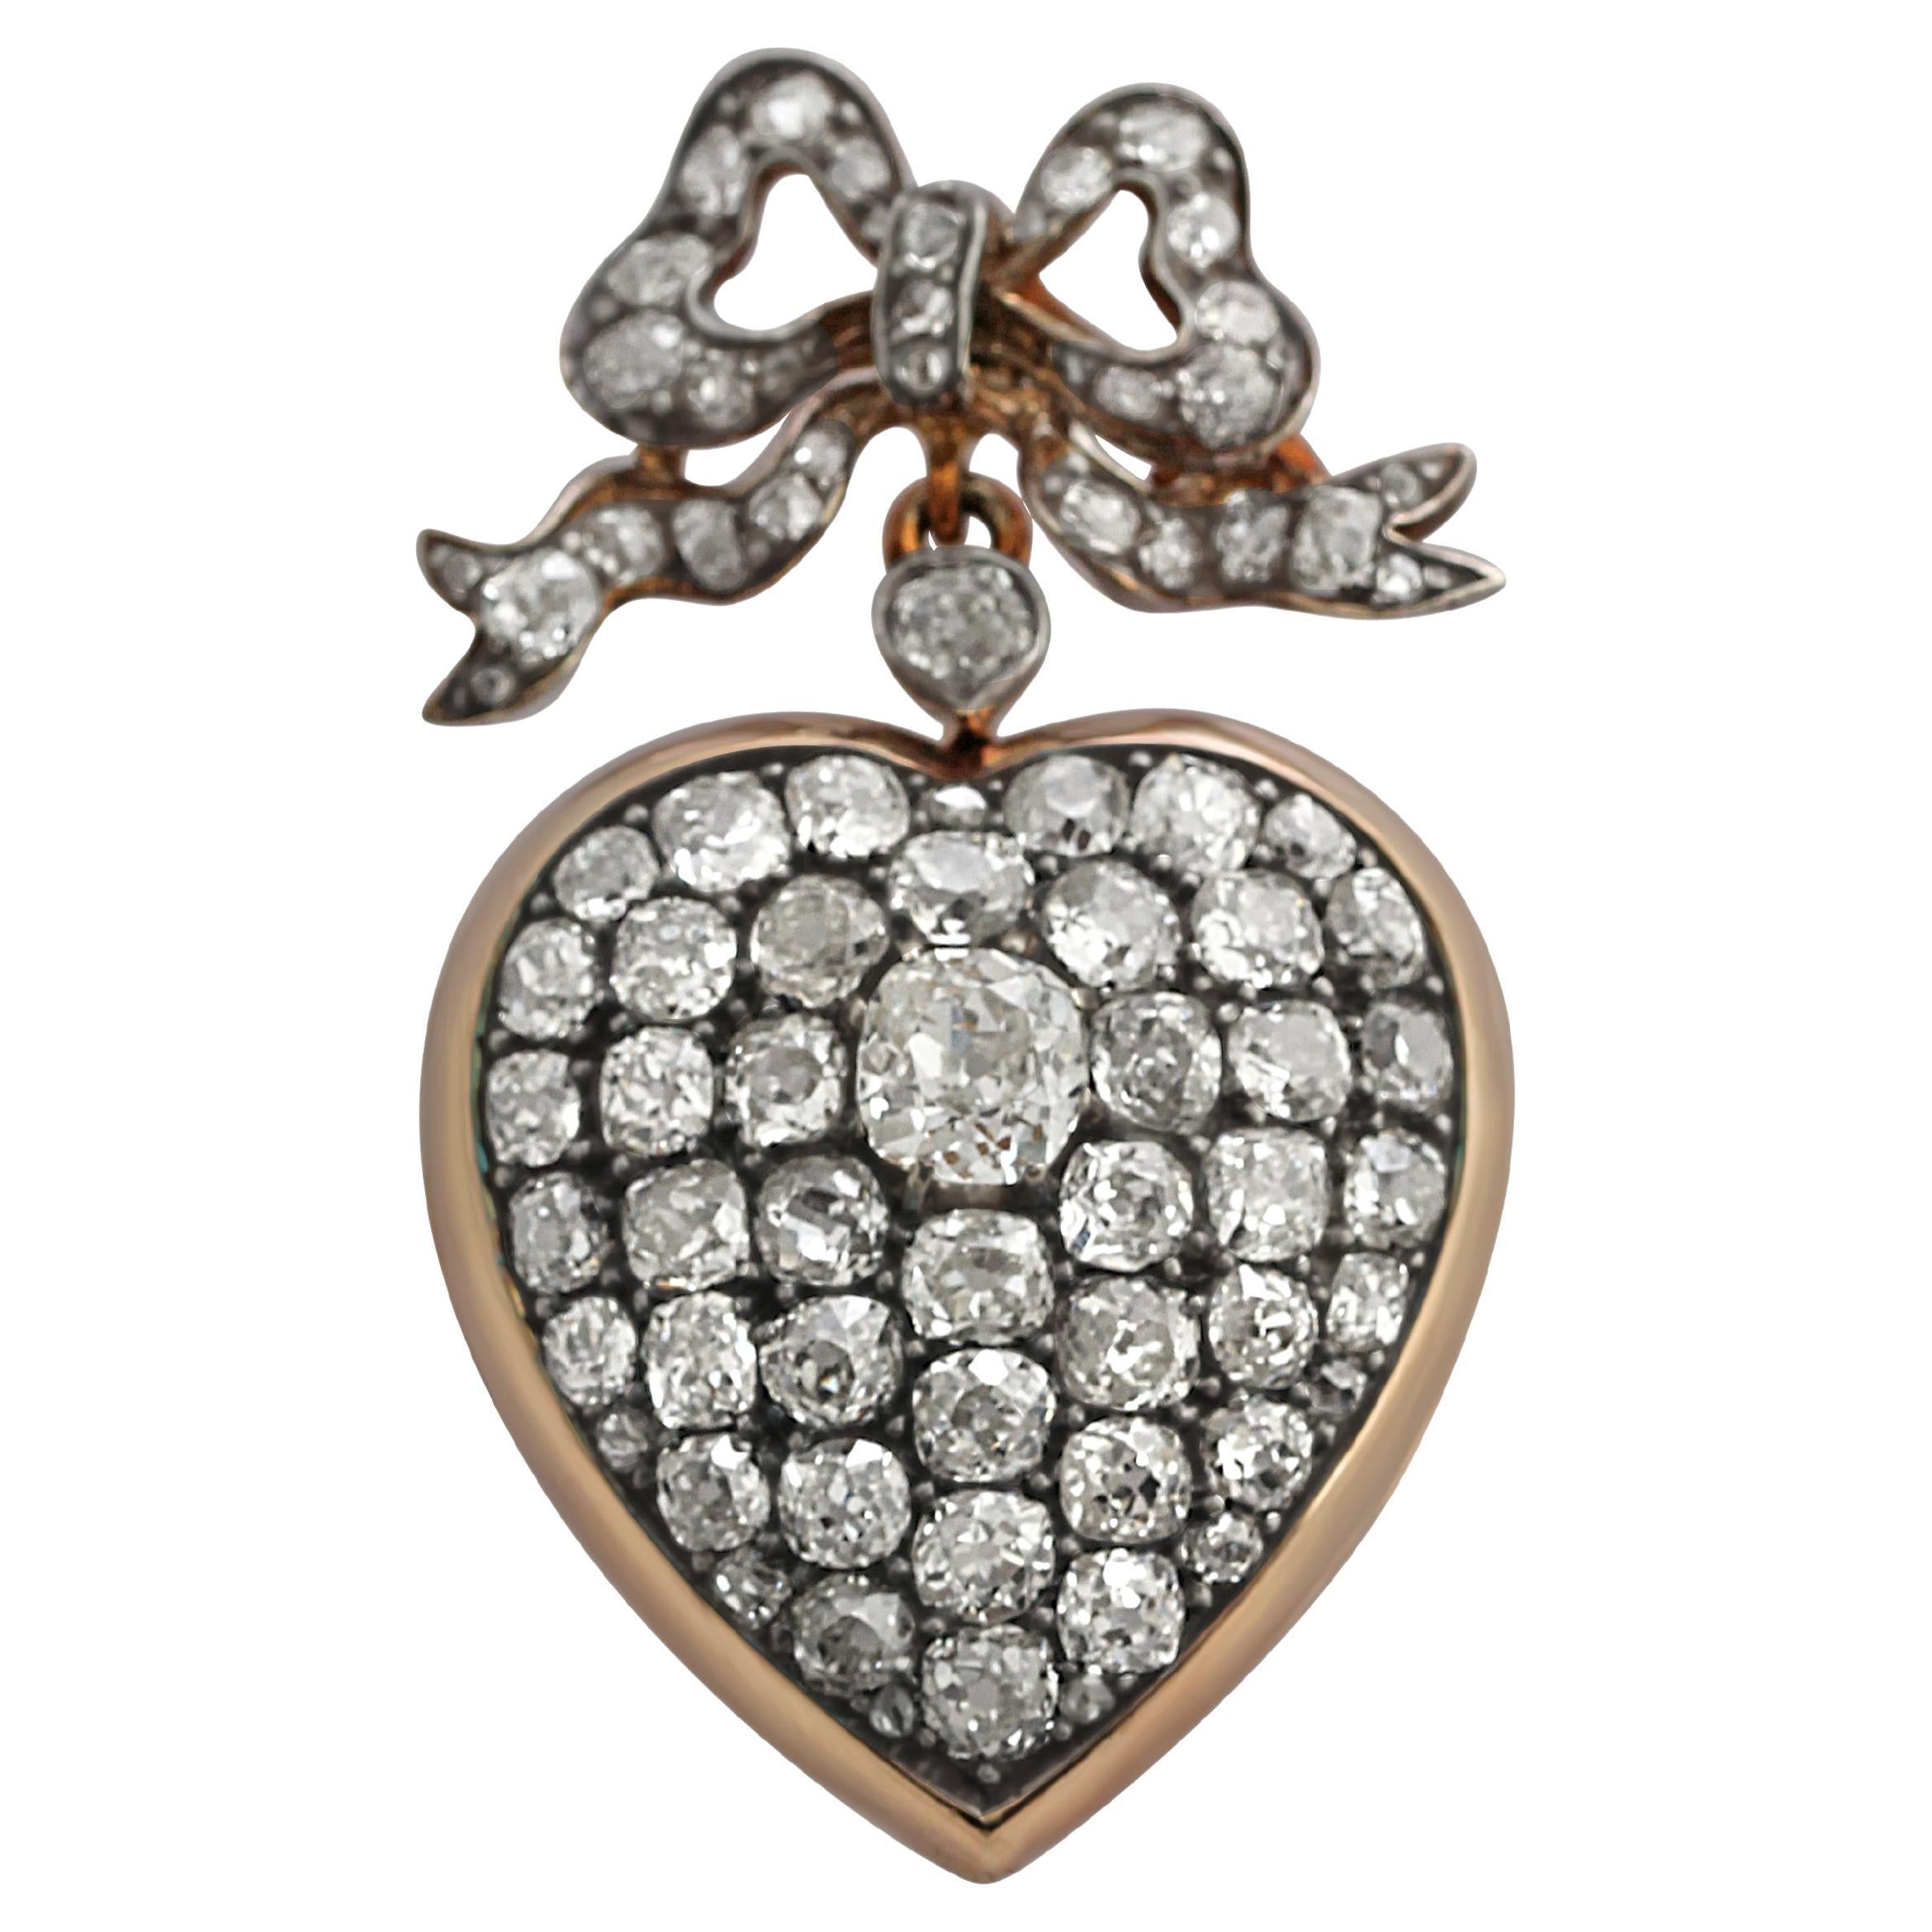 An Antique Diamond Heart Pendant